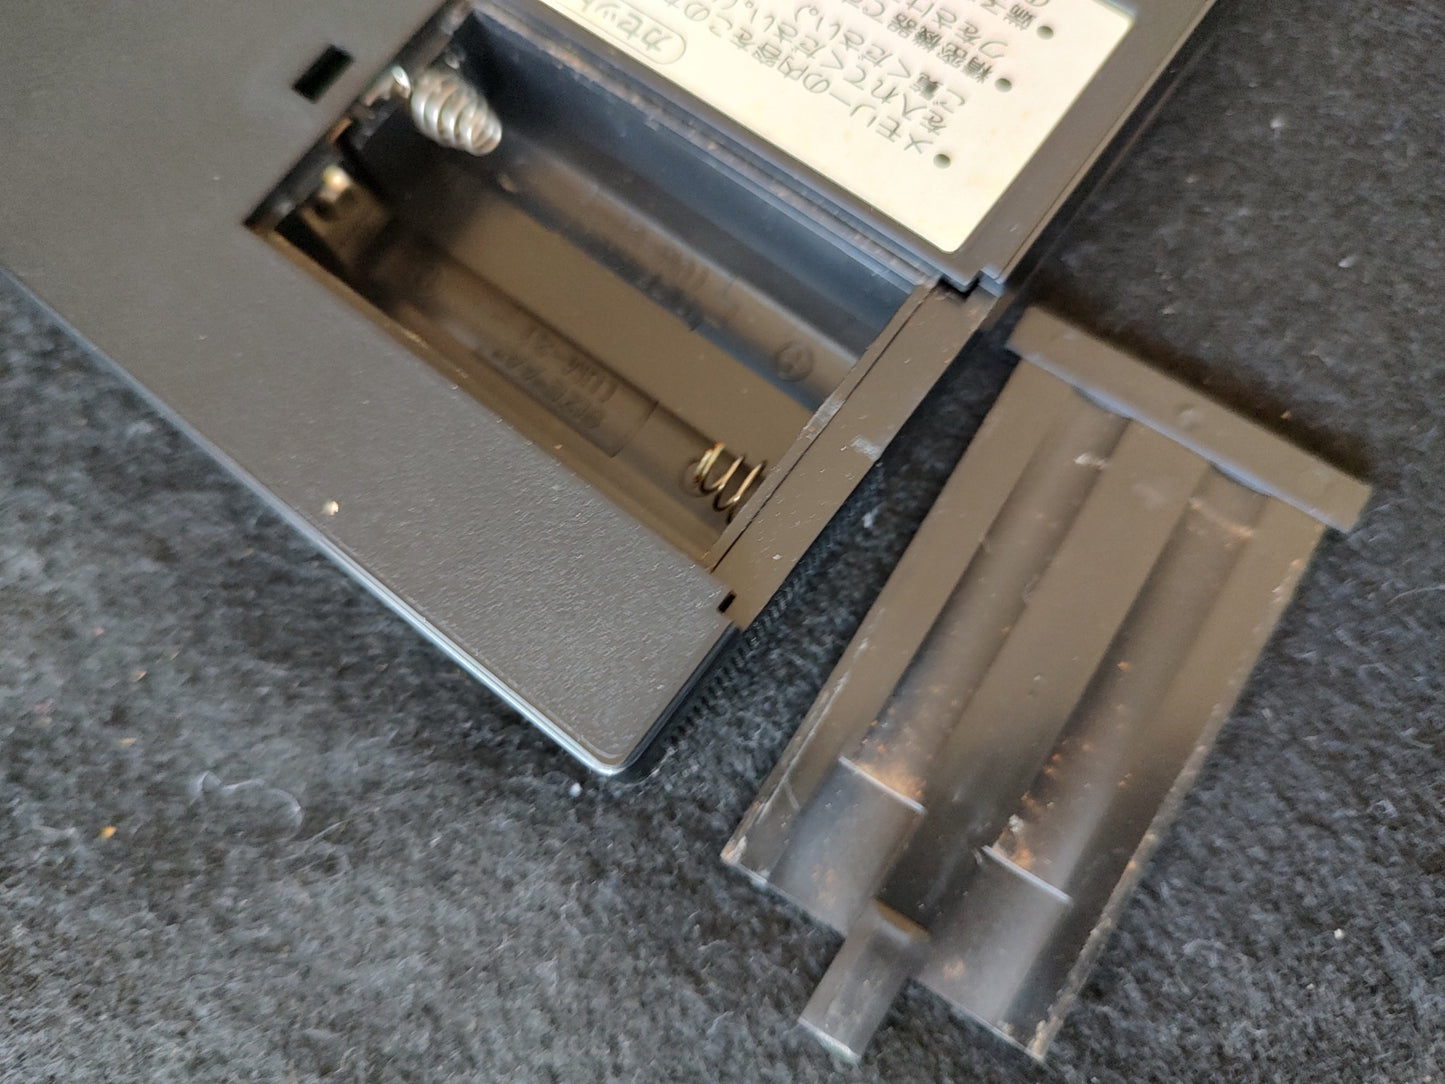 Nintendo Famicom Family Basic Keyboard console ,manual HVC-007 Boxed set-f0822-